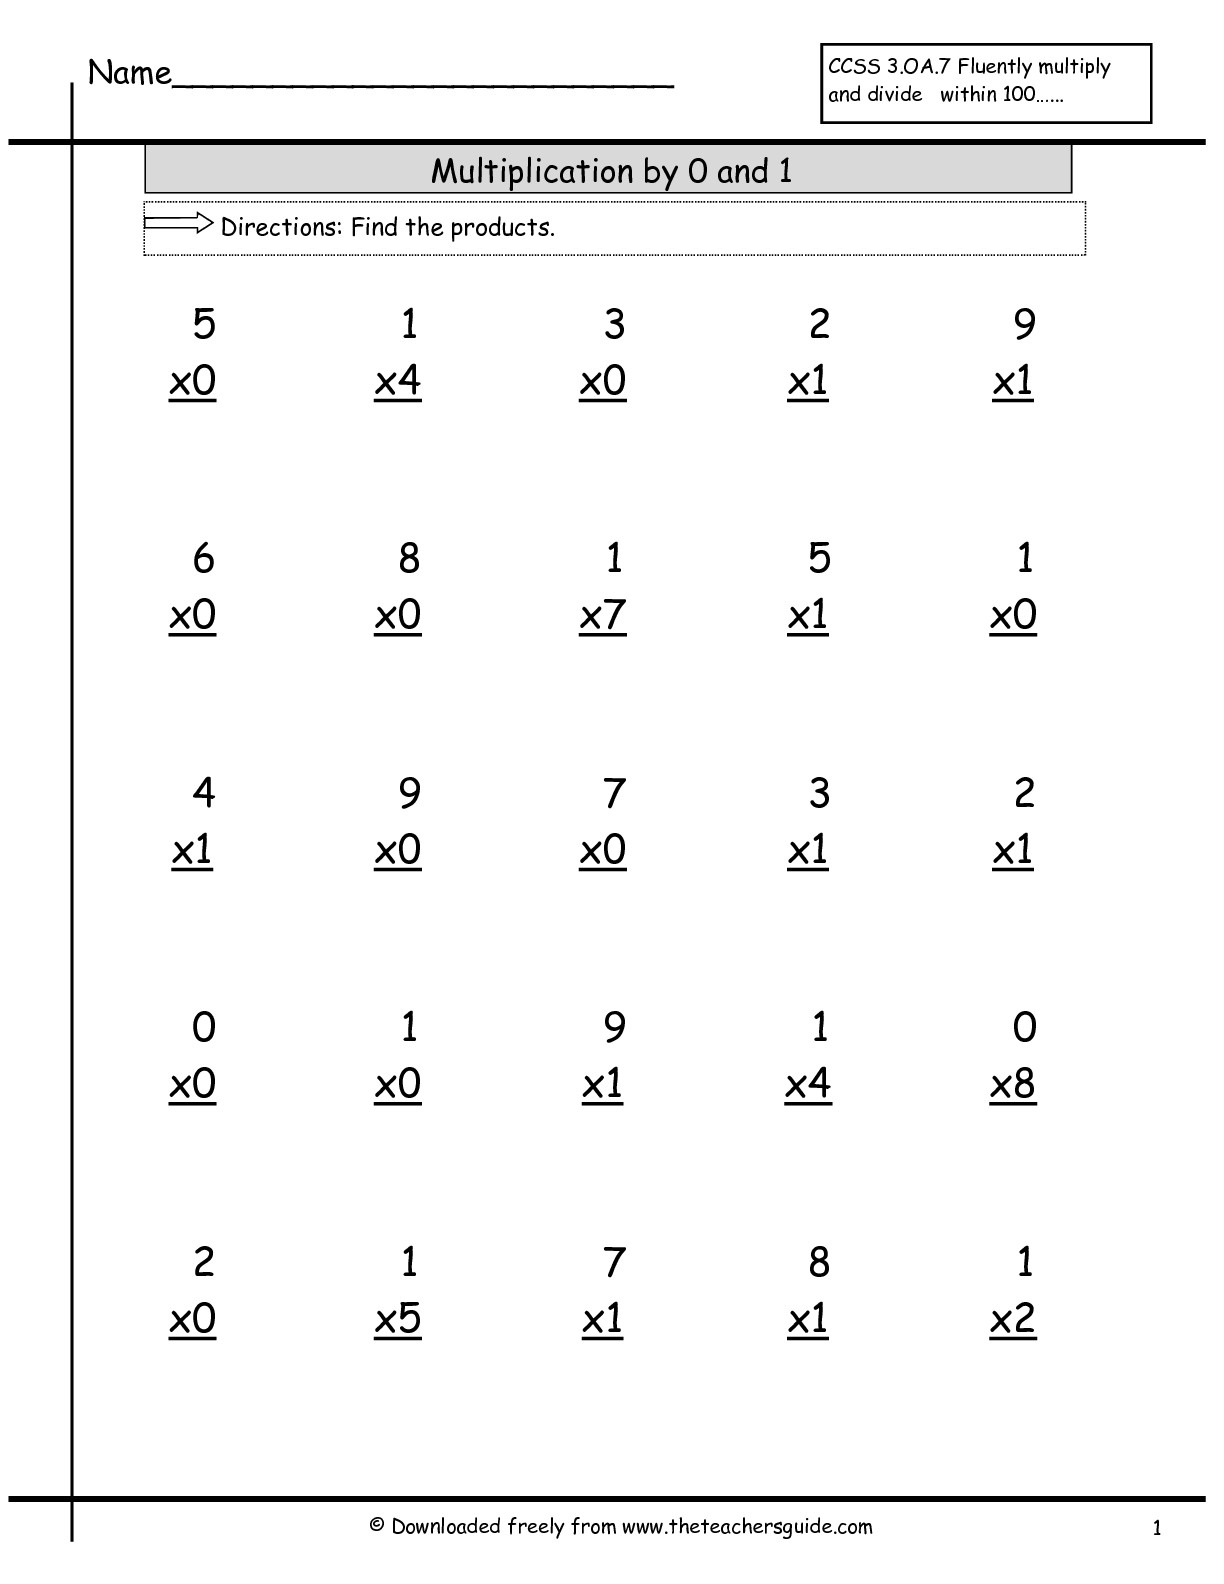 Multiplication Worksheets X10 | PrintableMultiplication.com